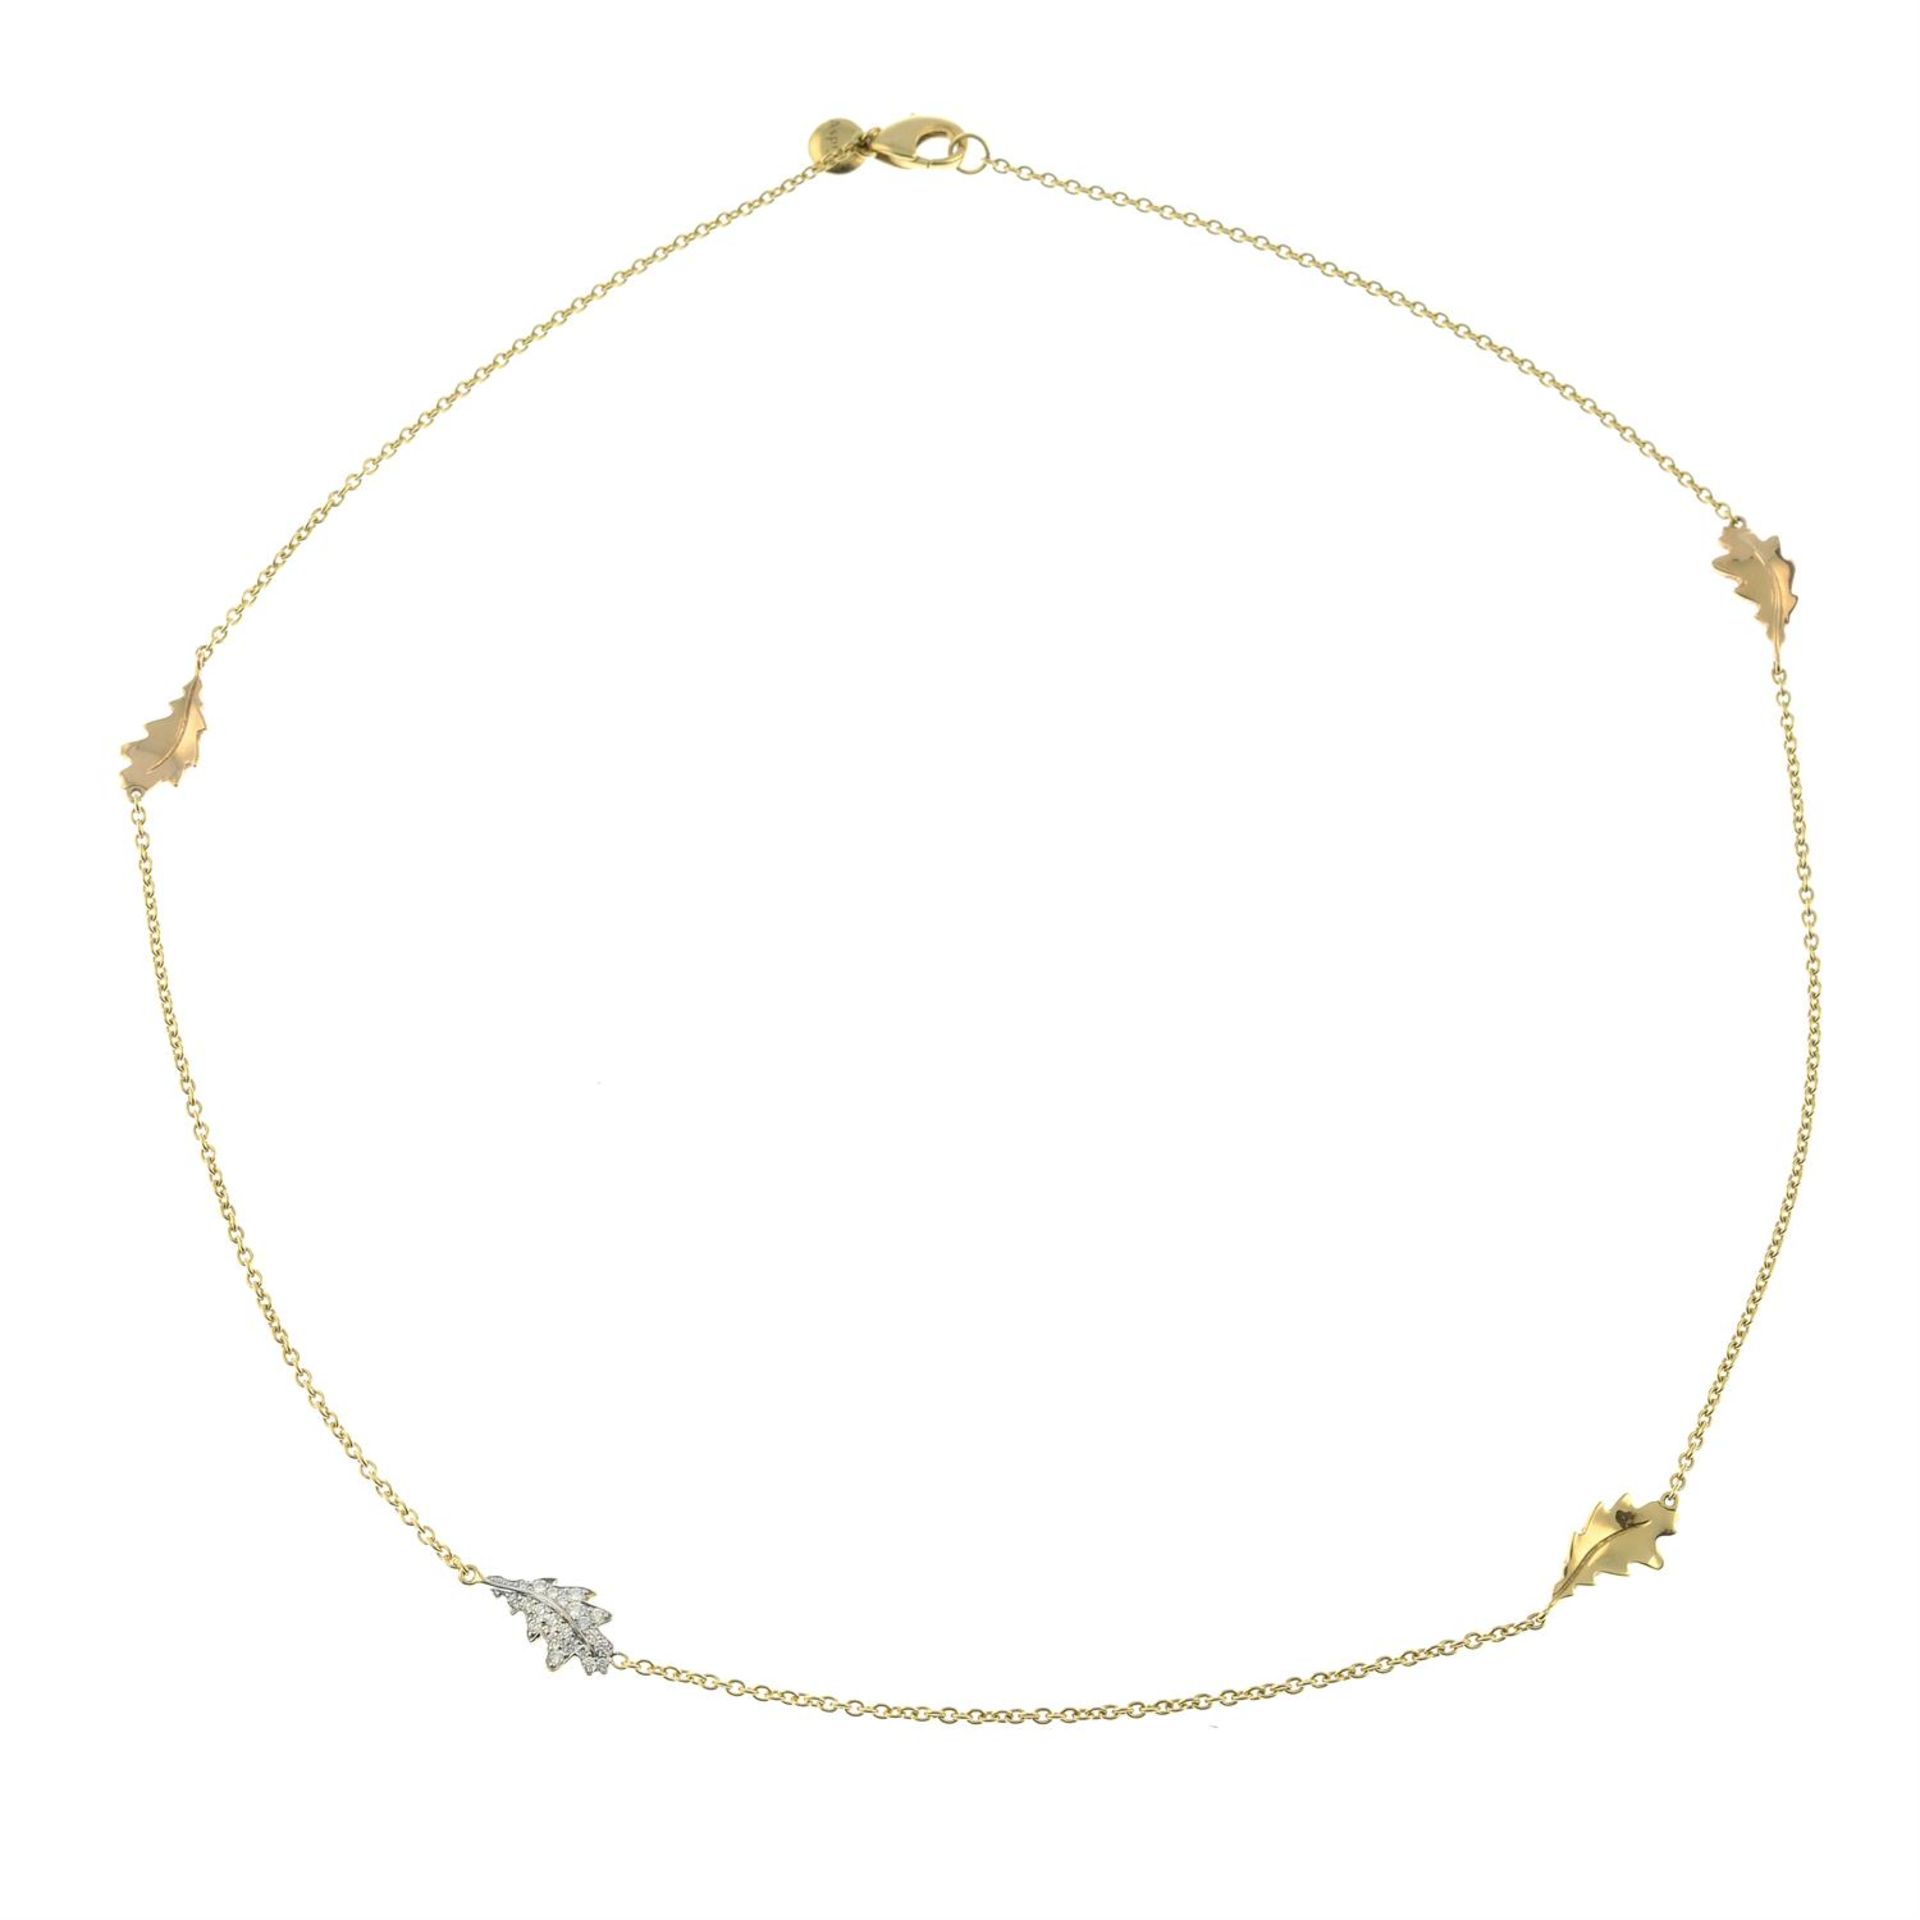 A tri-colour 18ct gold foliate motif necklace, with pavé-set diamond highlight, by Asprey. - Image 3 of 4